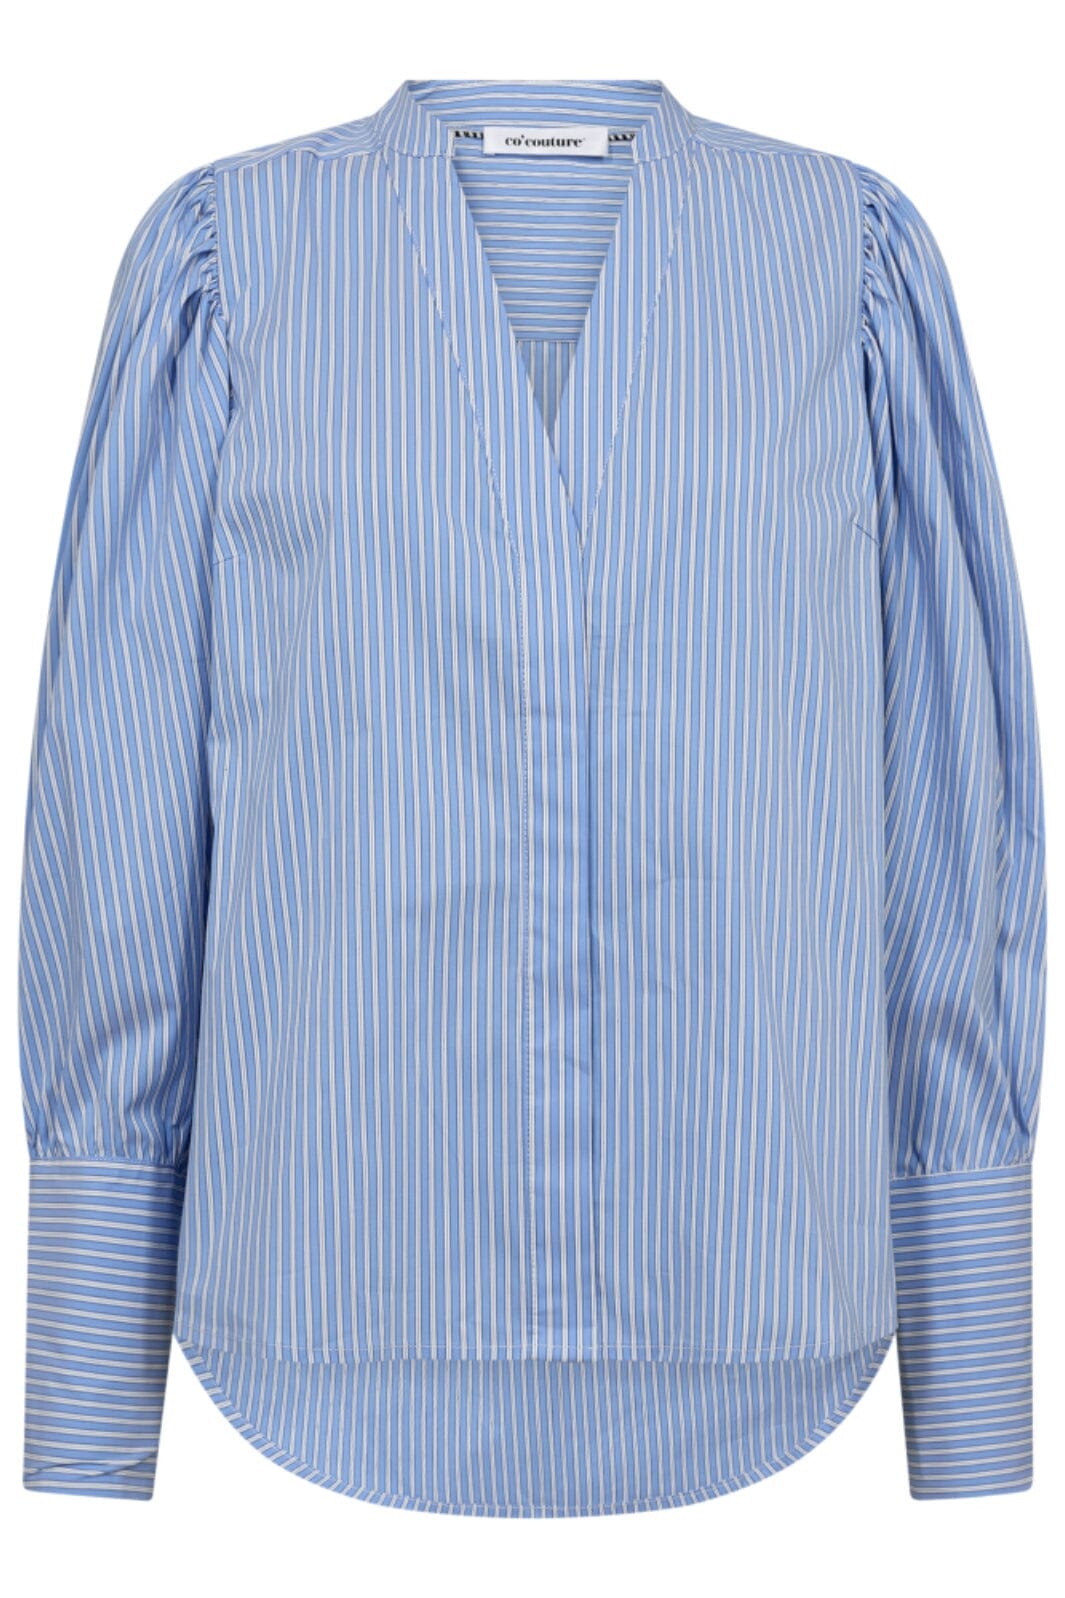 Co´couture - Addiecc Stripe V-Shirt 35582 - 23 Pale Blue Skjorter 